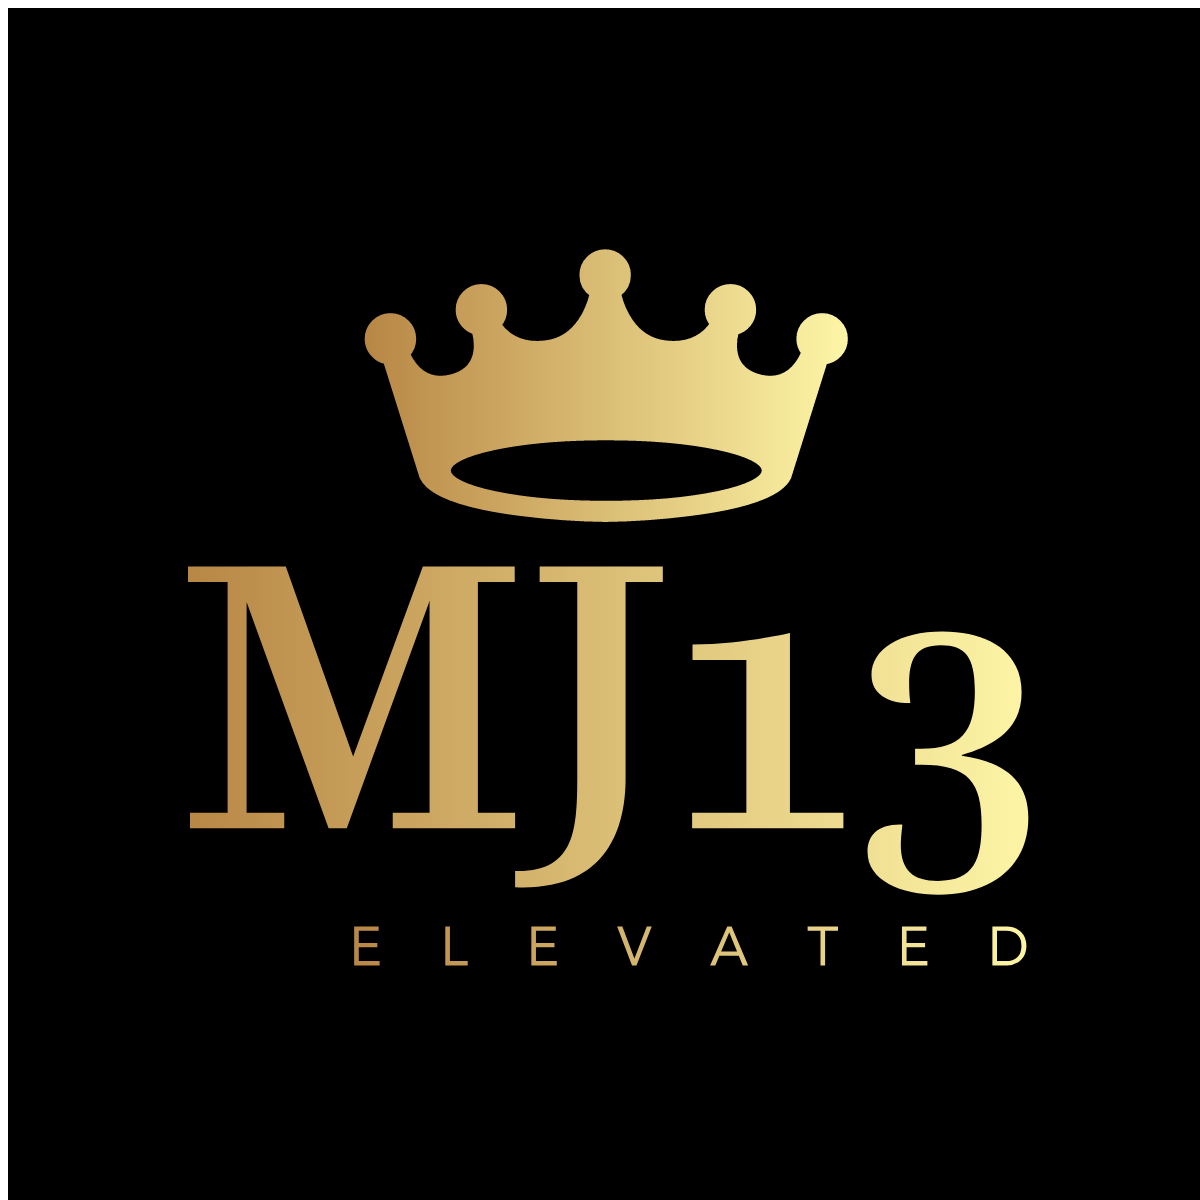 MJ 13 Elevated - Medical Marijuana Doctors - Cannabizme.com